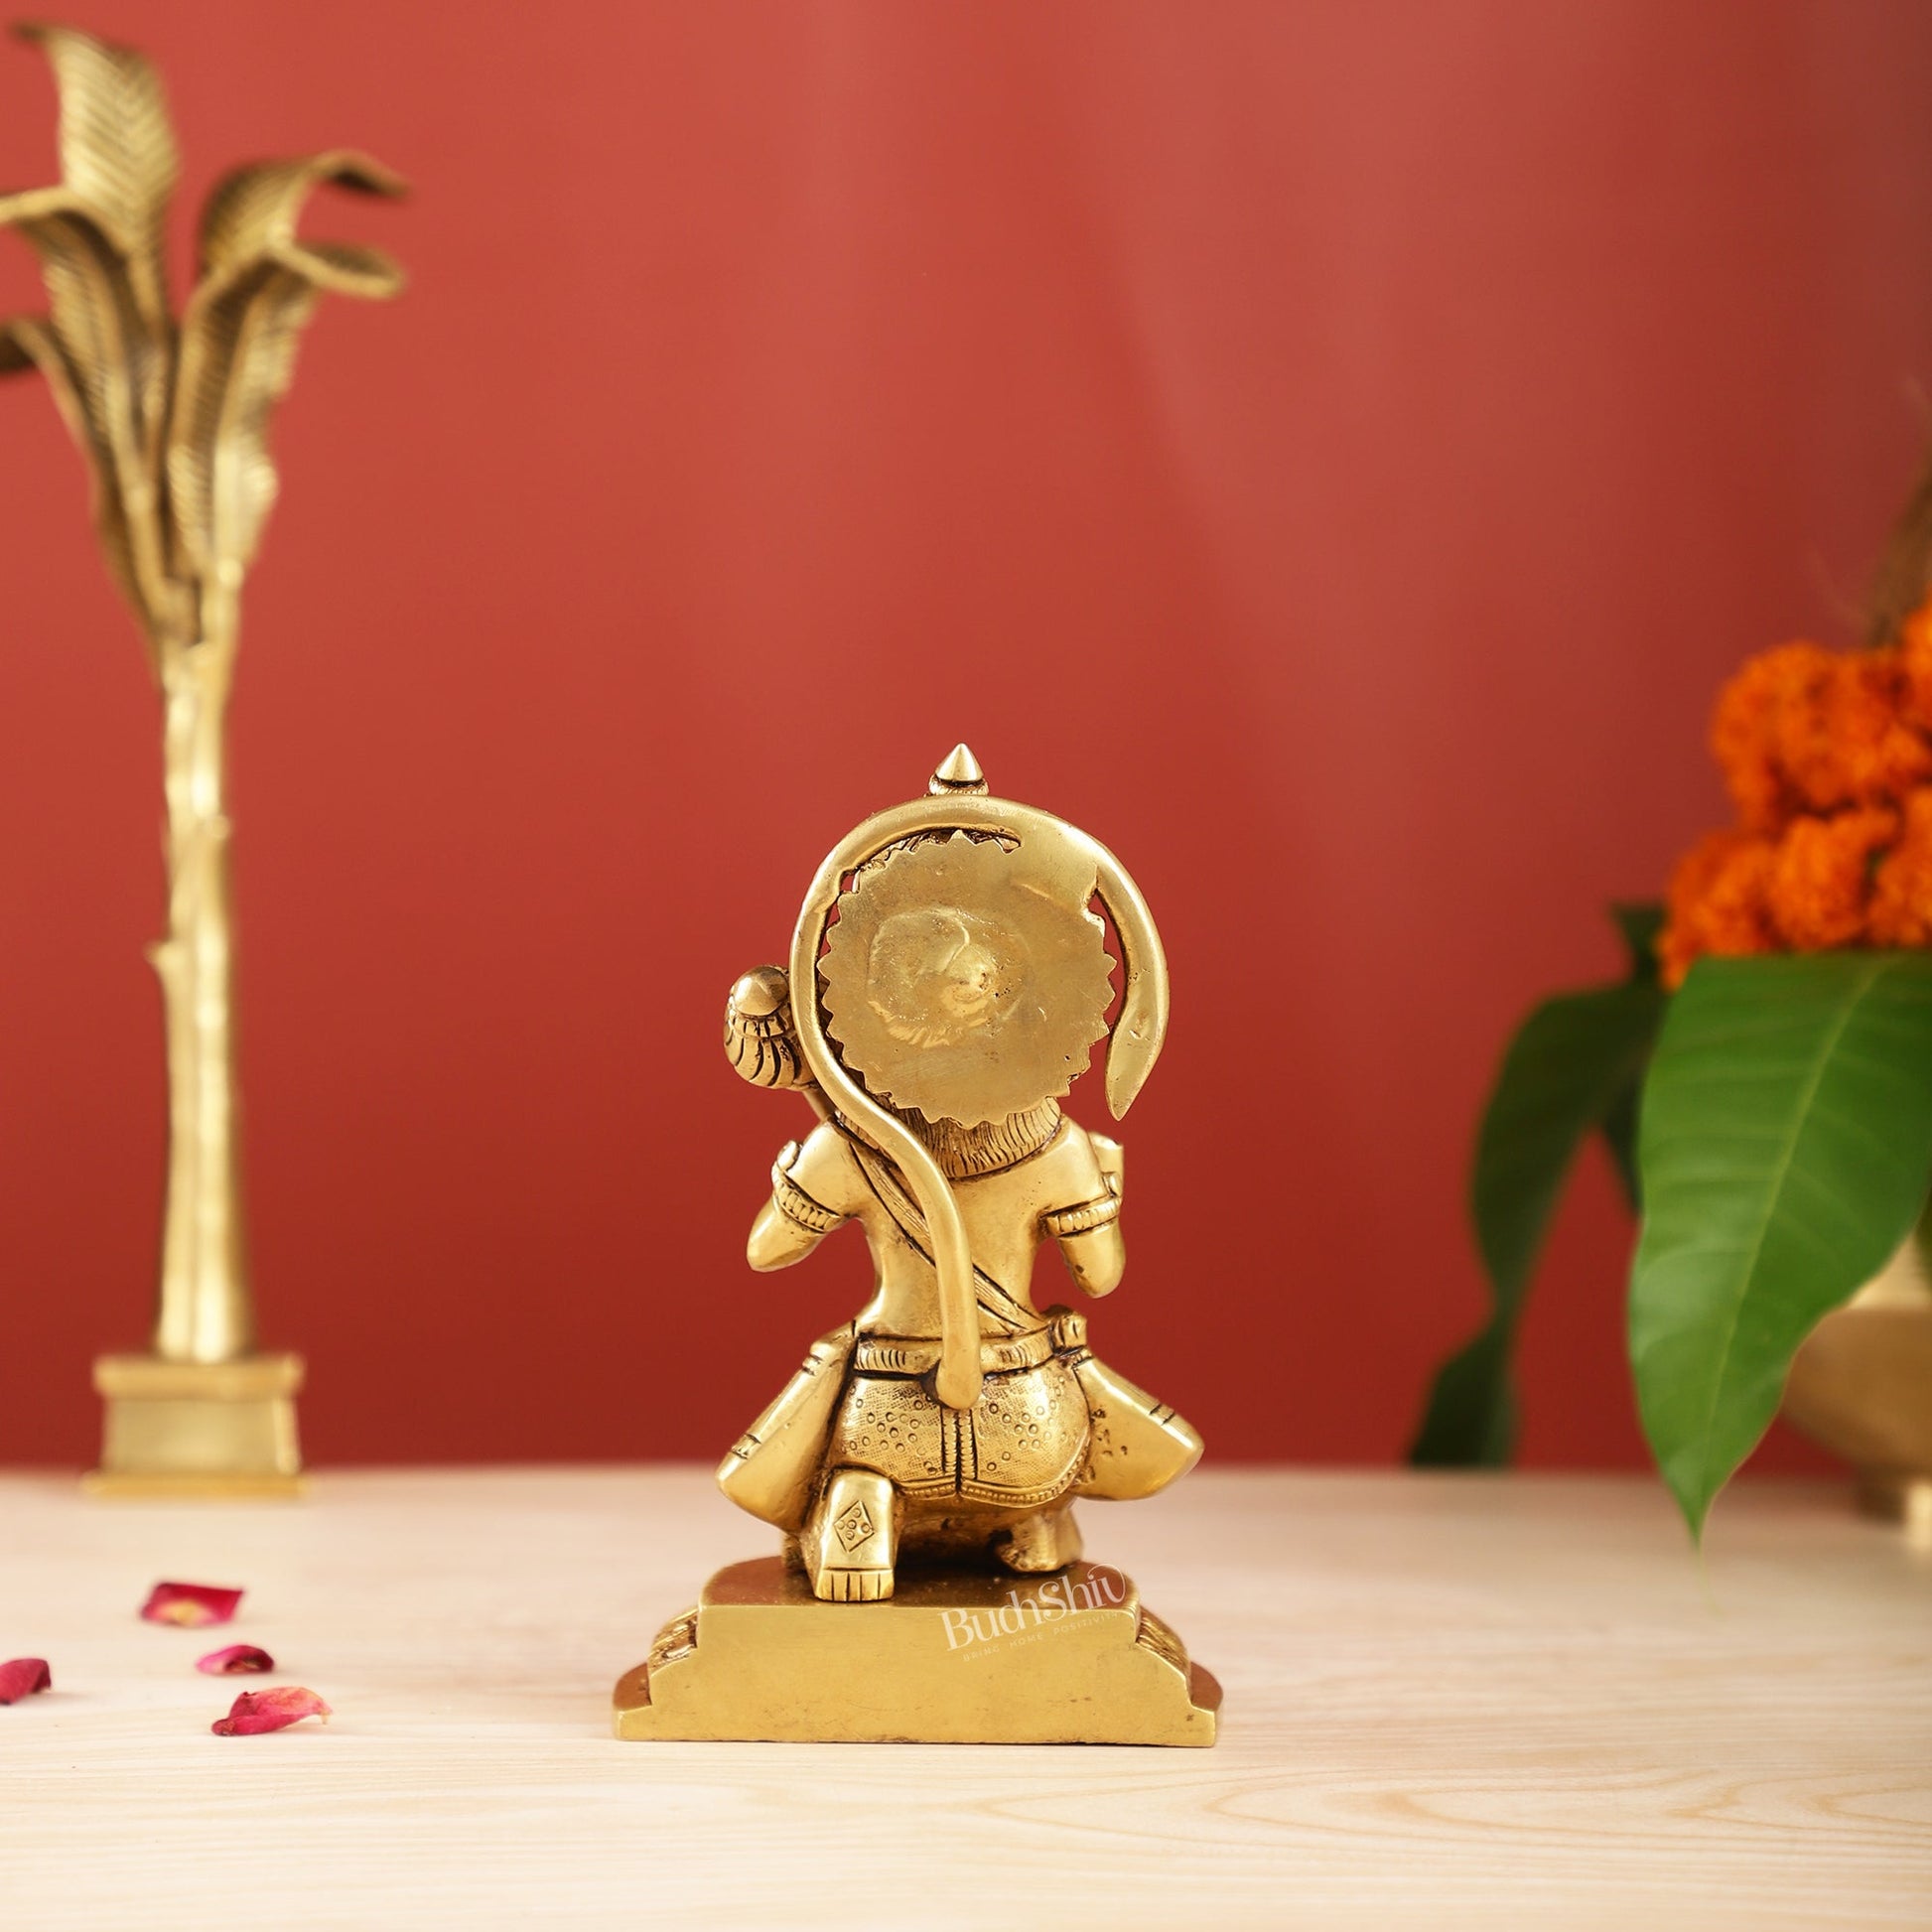 Sankat Mochan Hanuman Ji Superfine Brass Idol 6.5 inch - Budhshiv.com